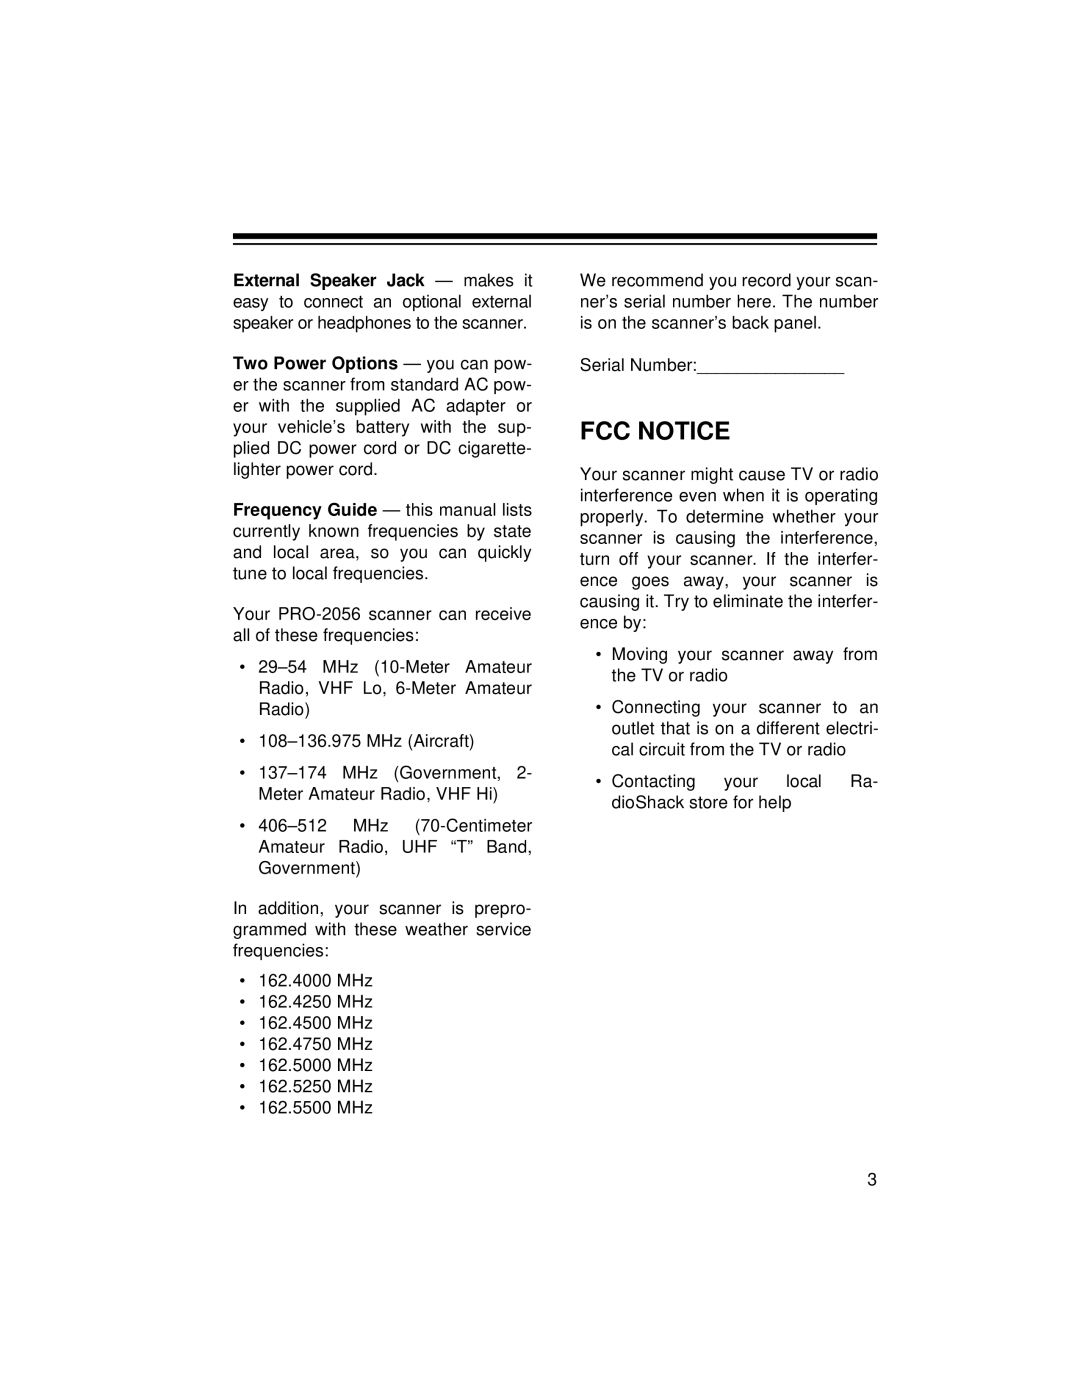 Radio Shack PRO-2056 owner manual Fcc Notice 